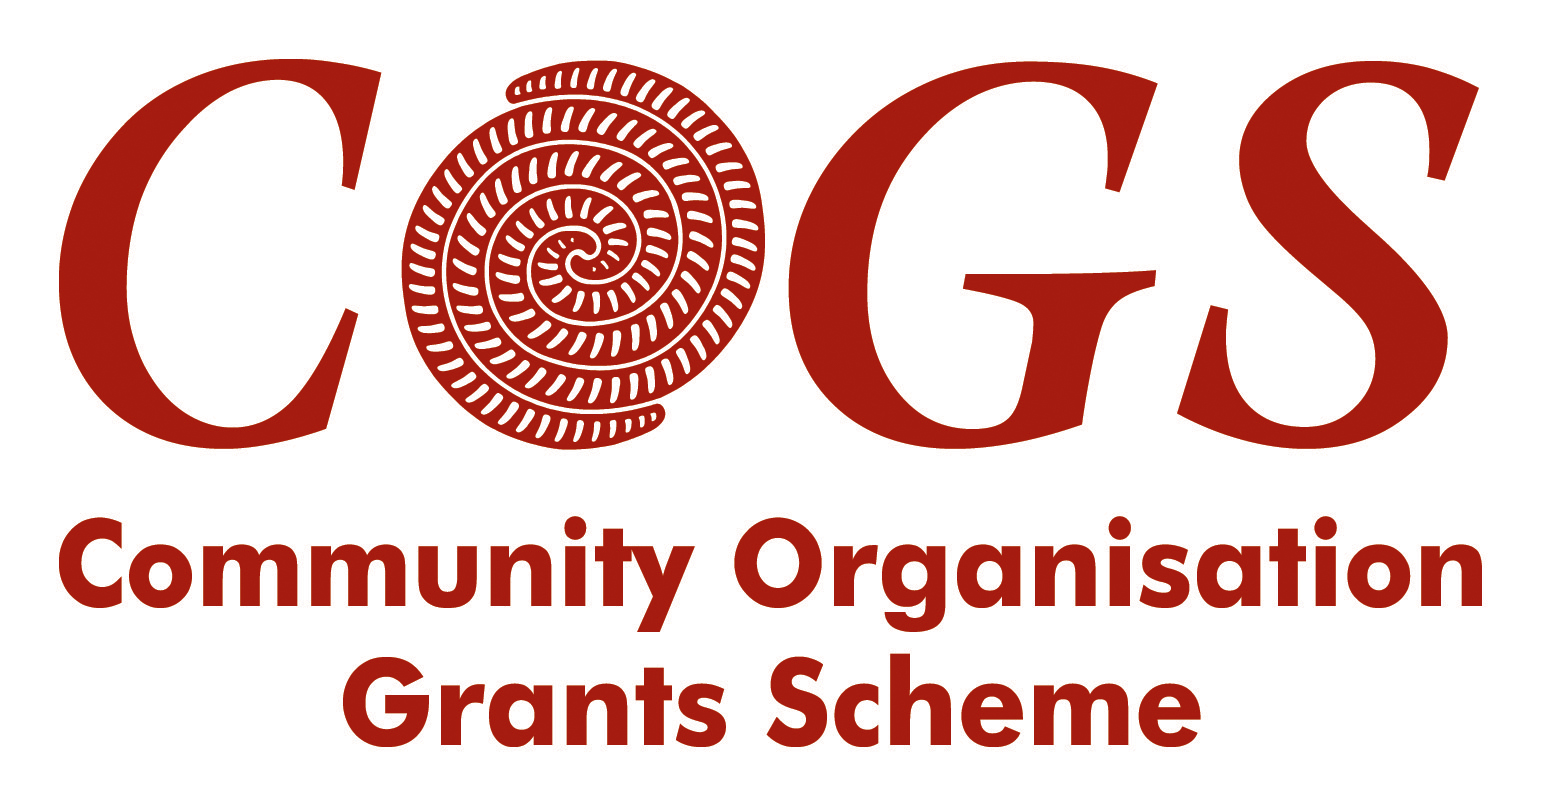 Community Organization Grants Scheme